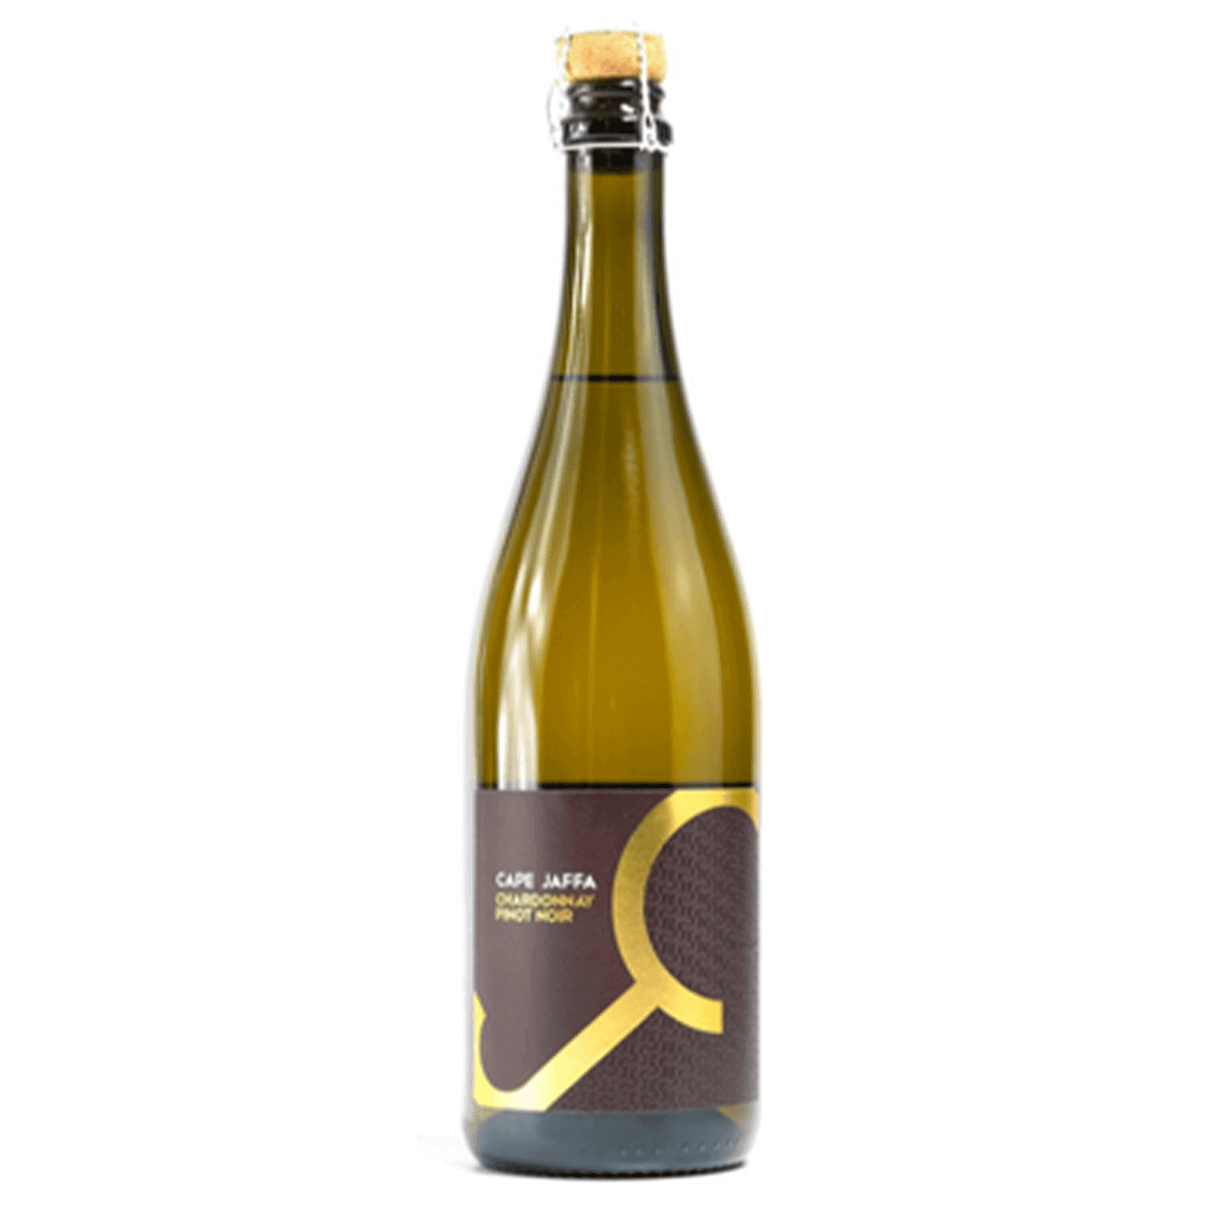 Cape Jaffa Pinot Noir Chardonnay  NV (12 bottles)